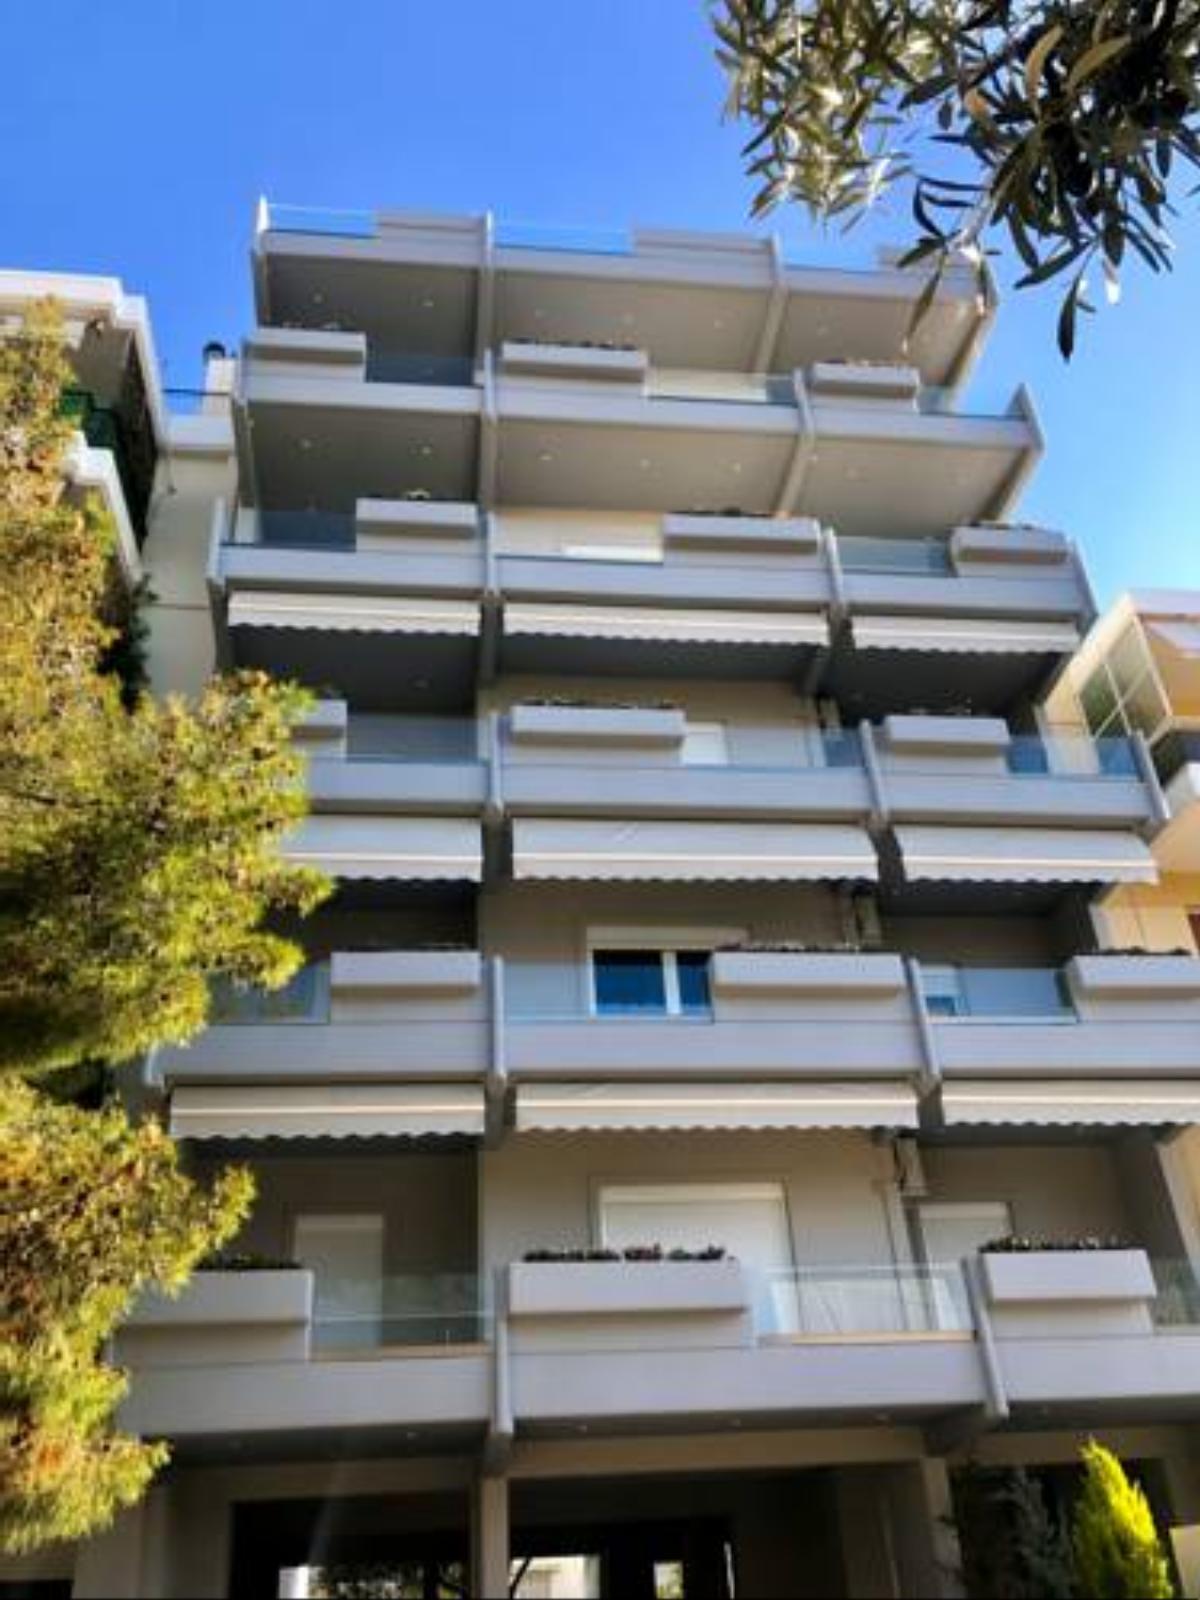 Sun City Apartment Hotel Athens Greece